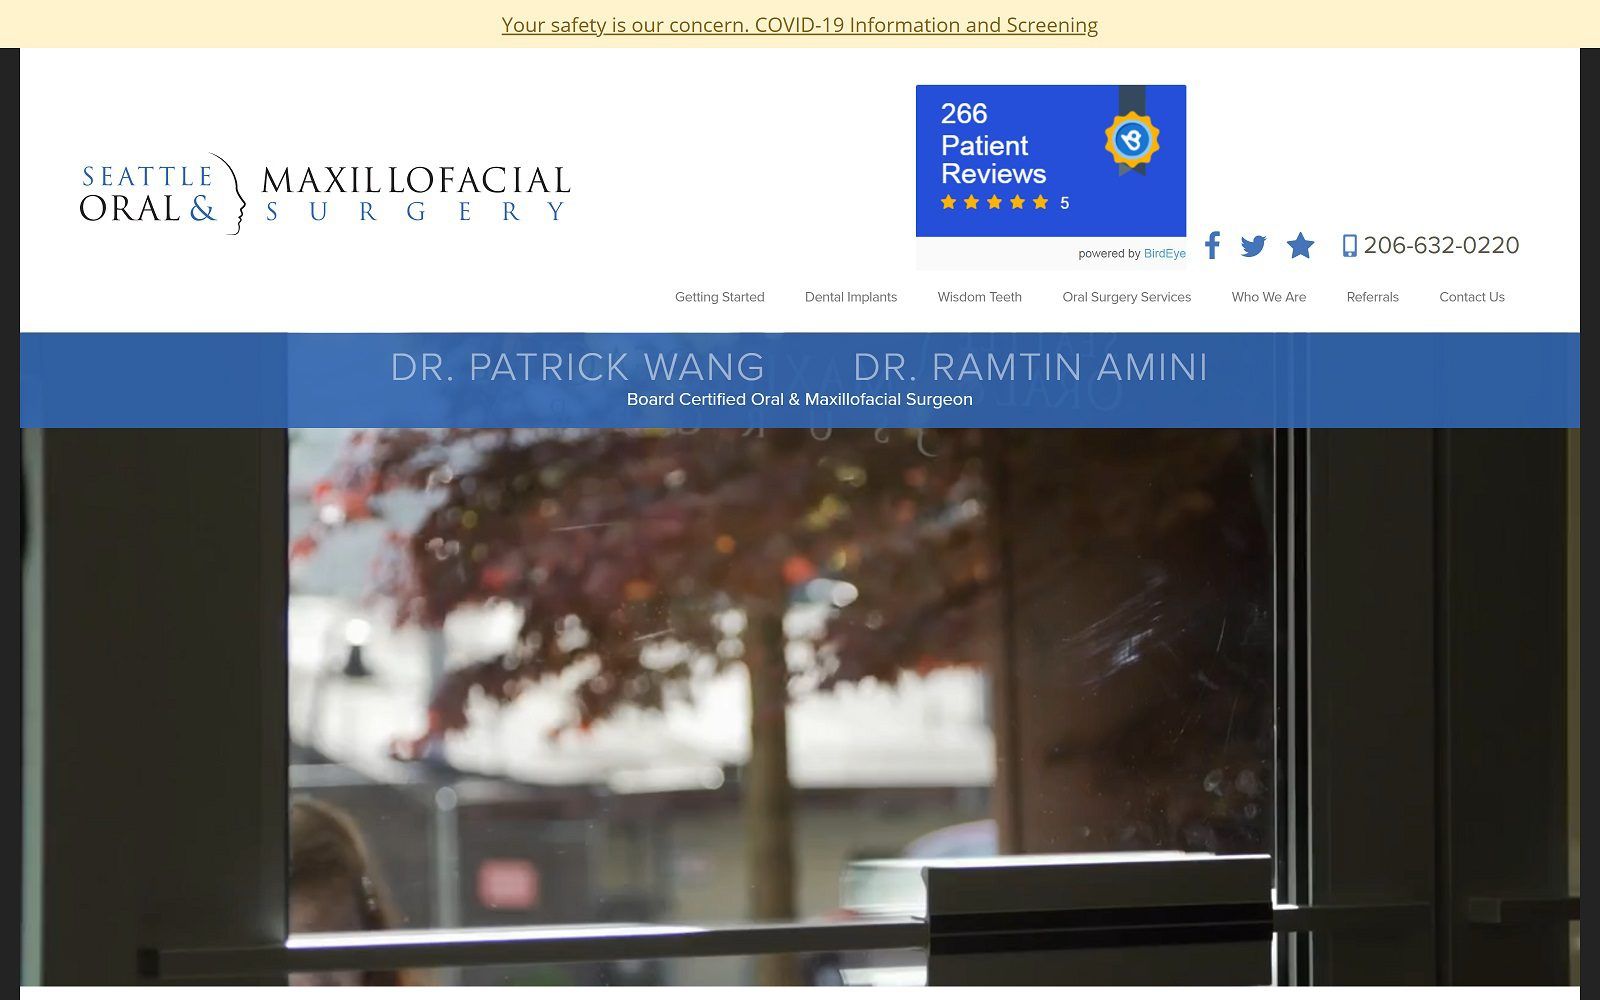 The screenshot of seattle oral & maxillofacial surgery website